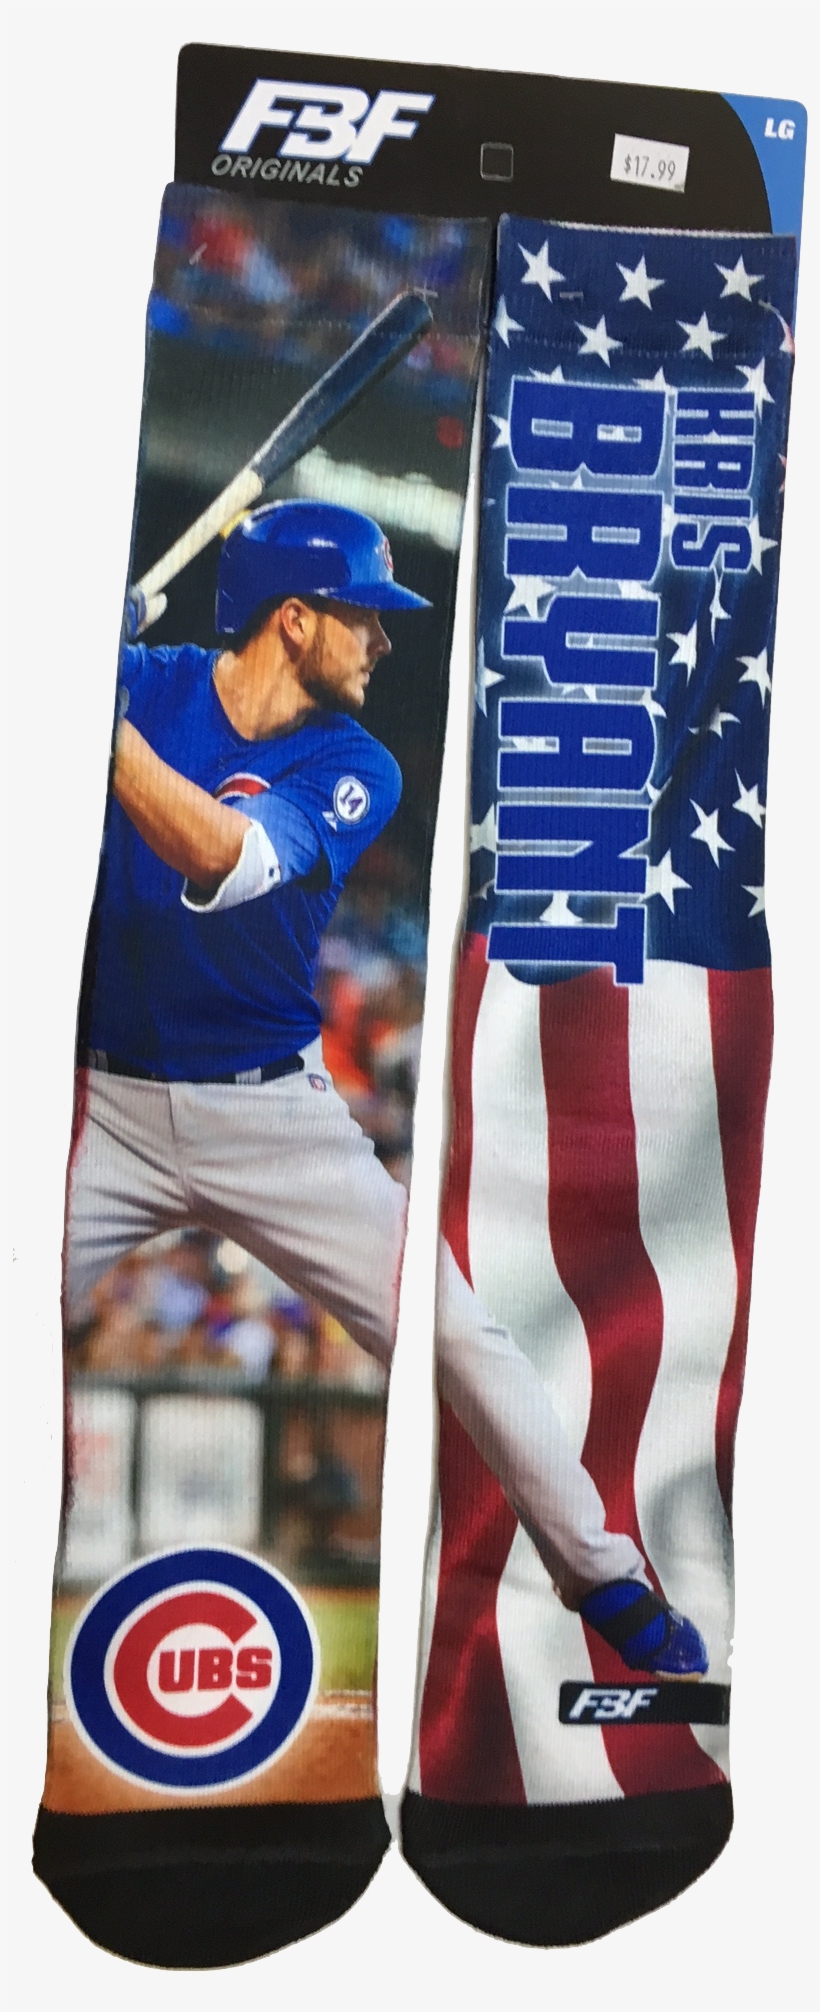 Officially Licensed Mlb Stars And Stipes Men's Socks - Baseball Player, transparent png #2210493